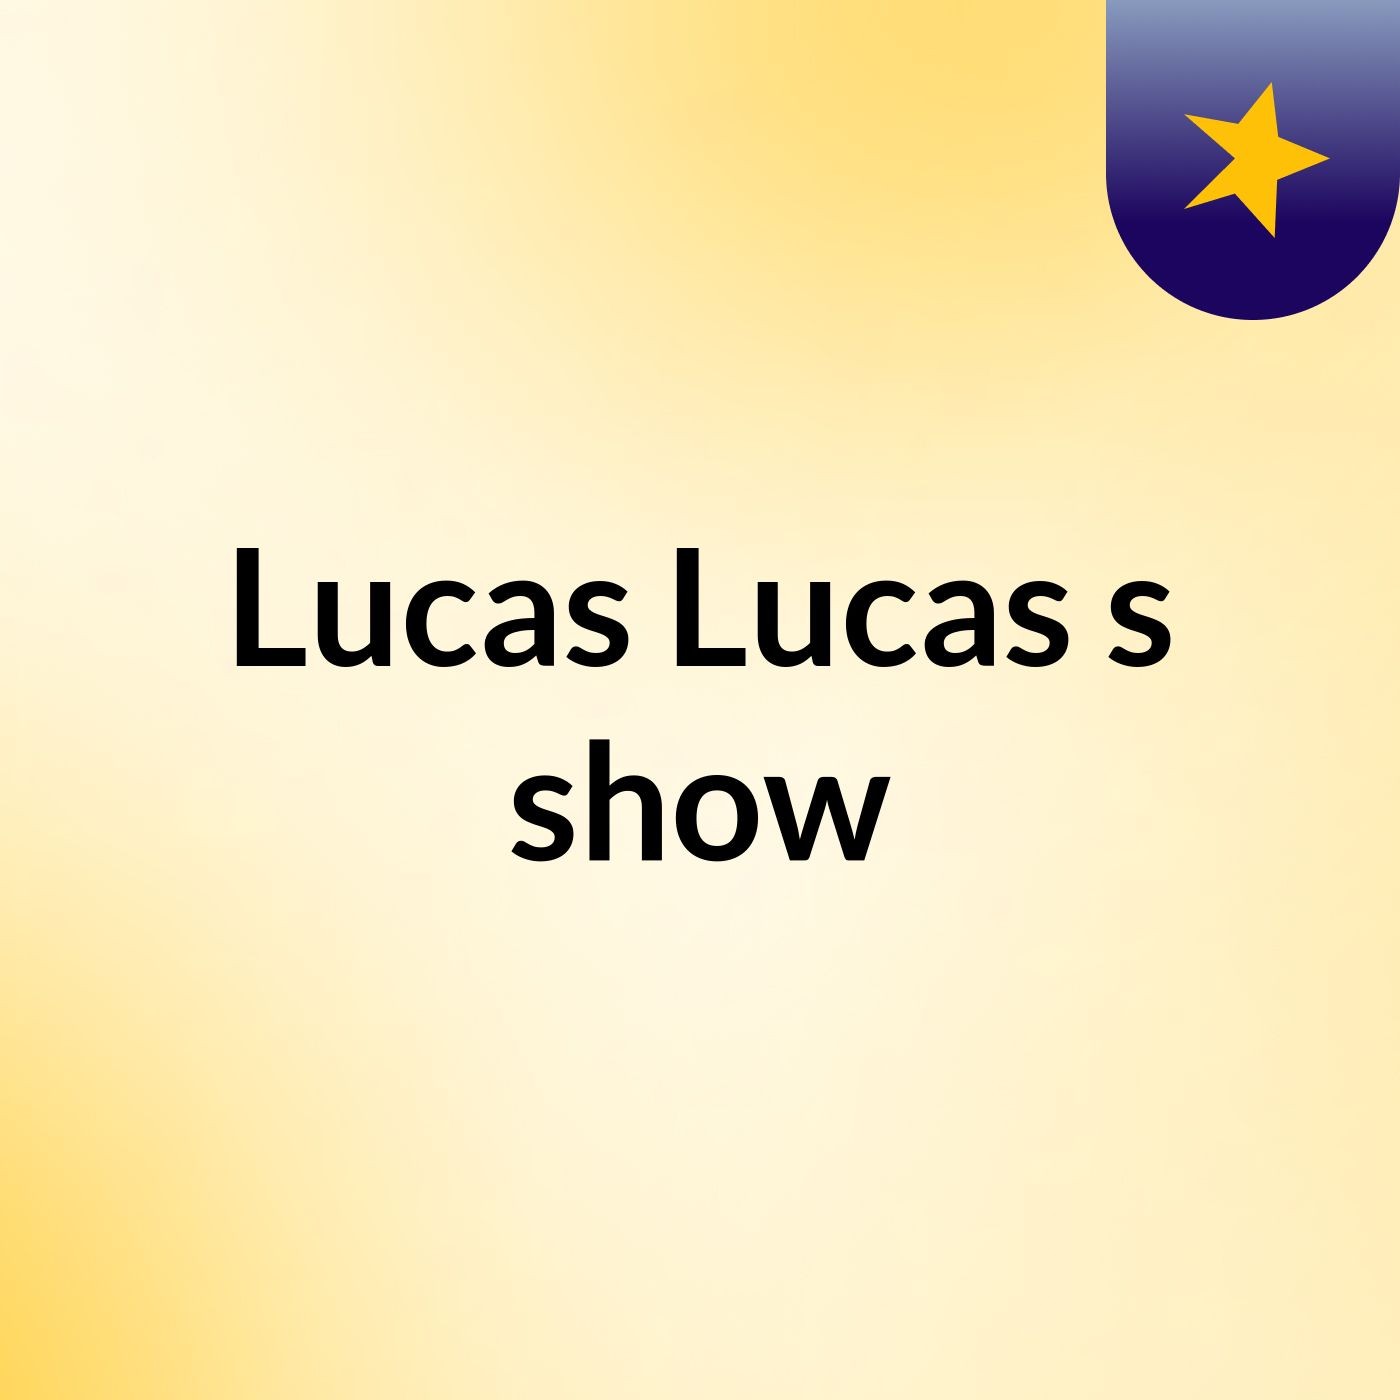 Lucas Lucas's show